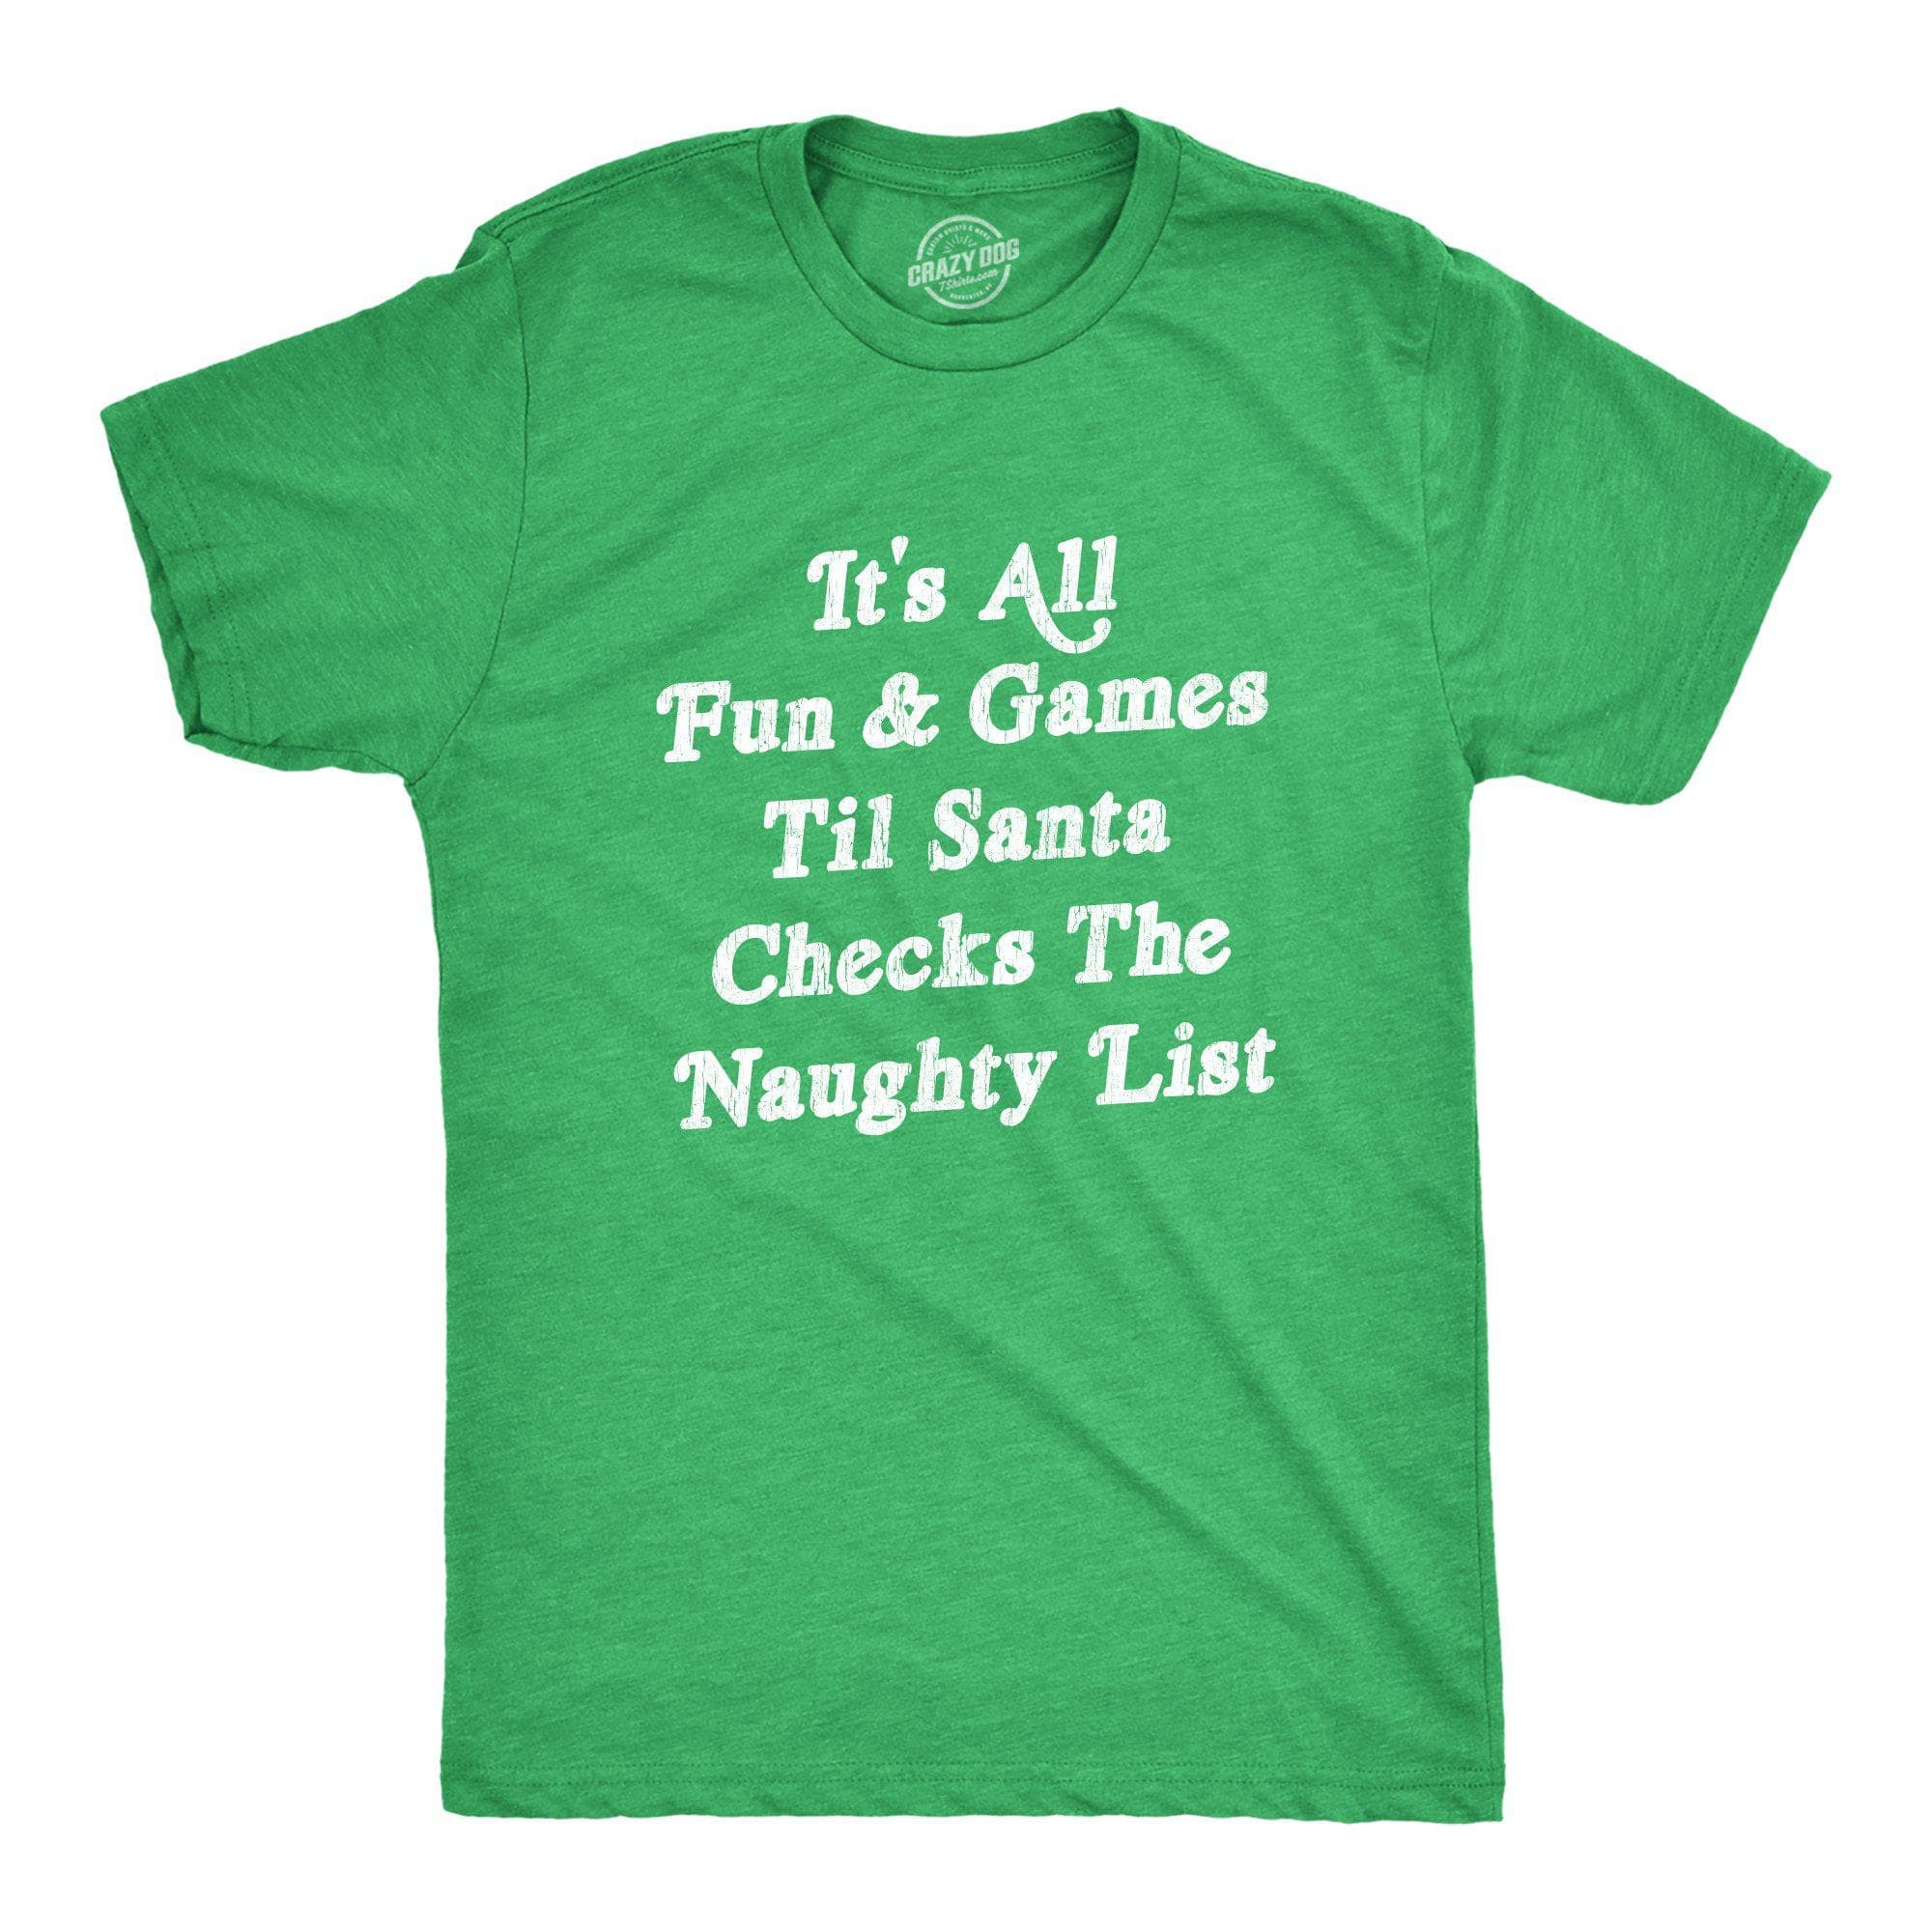 All Fun And Games Til Santa Checks The Naughty List Men's Tshirt - Crazy Dog T-Shirts